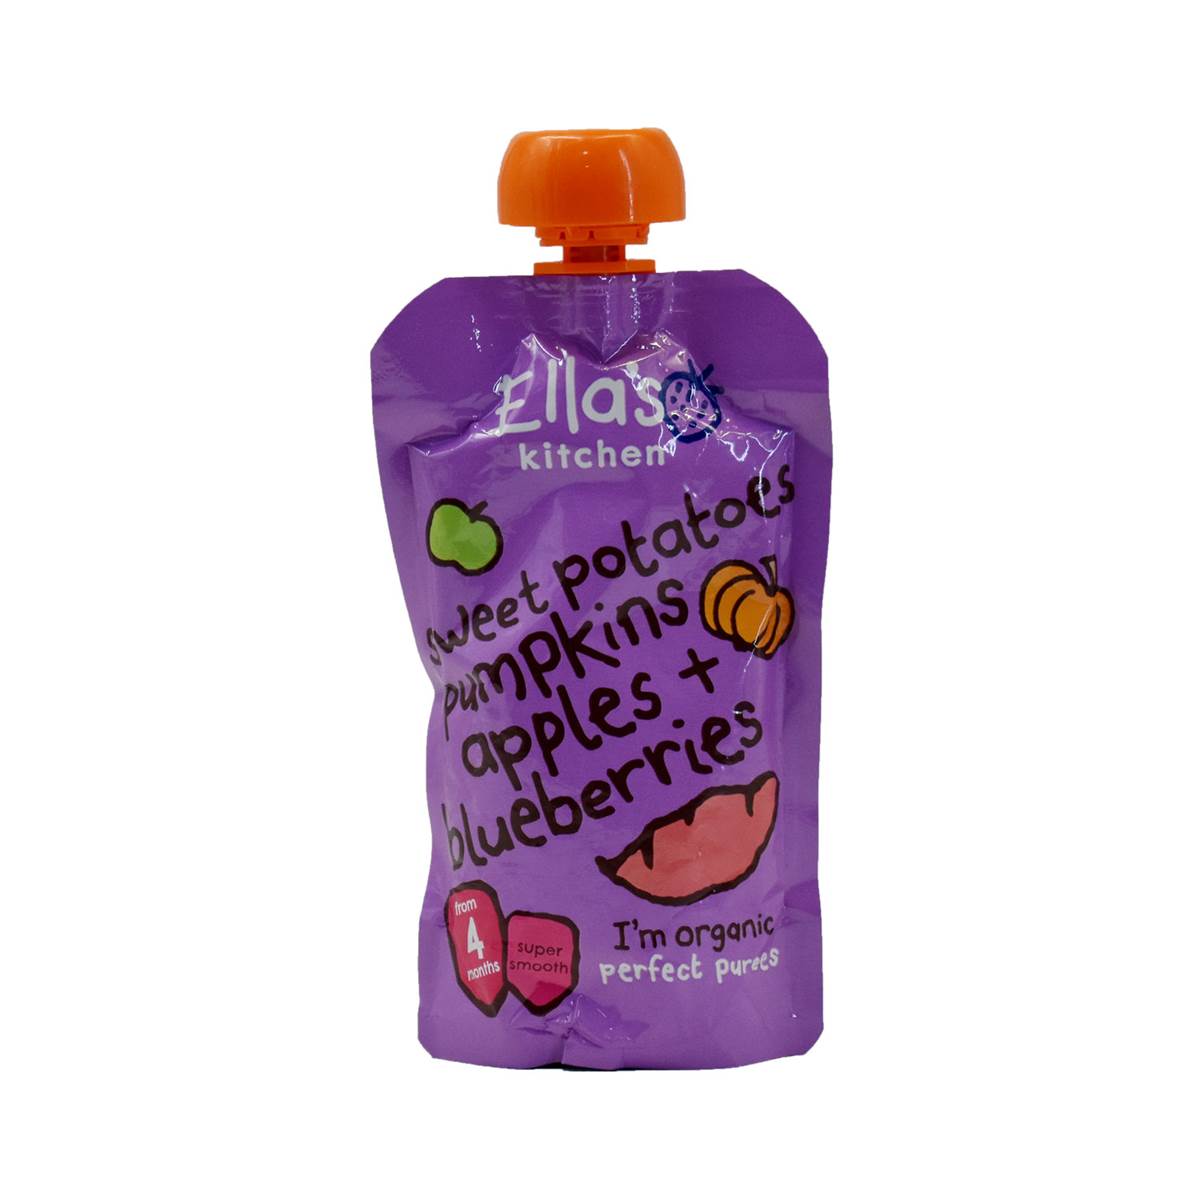 Ellas Kitchen Sweet Potatoes Pumpkin Apples + Blueberries - 120g